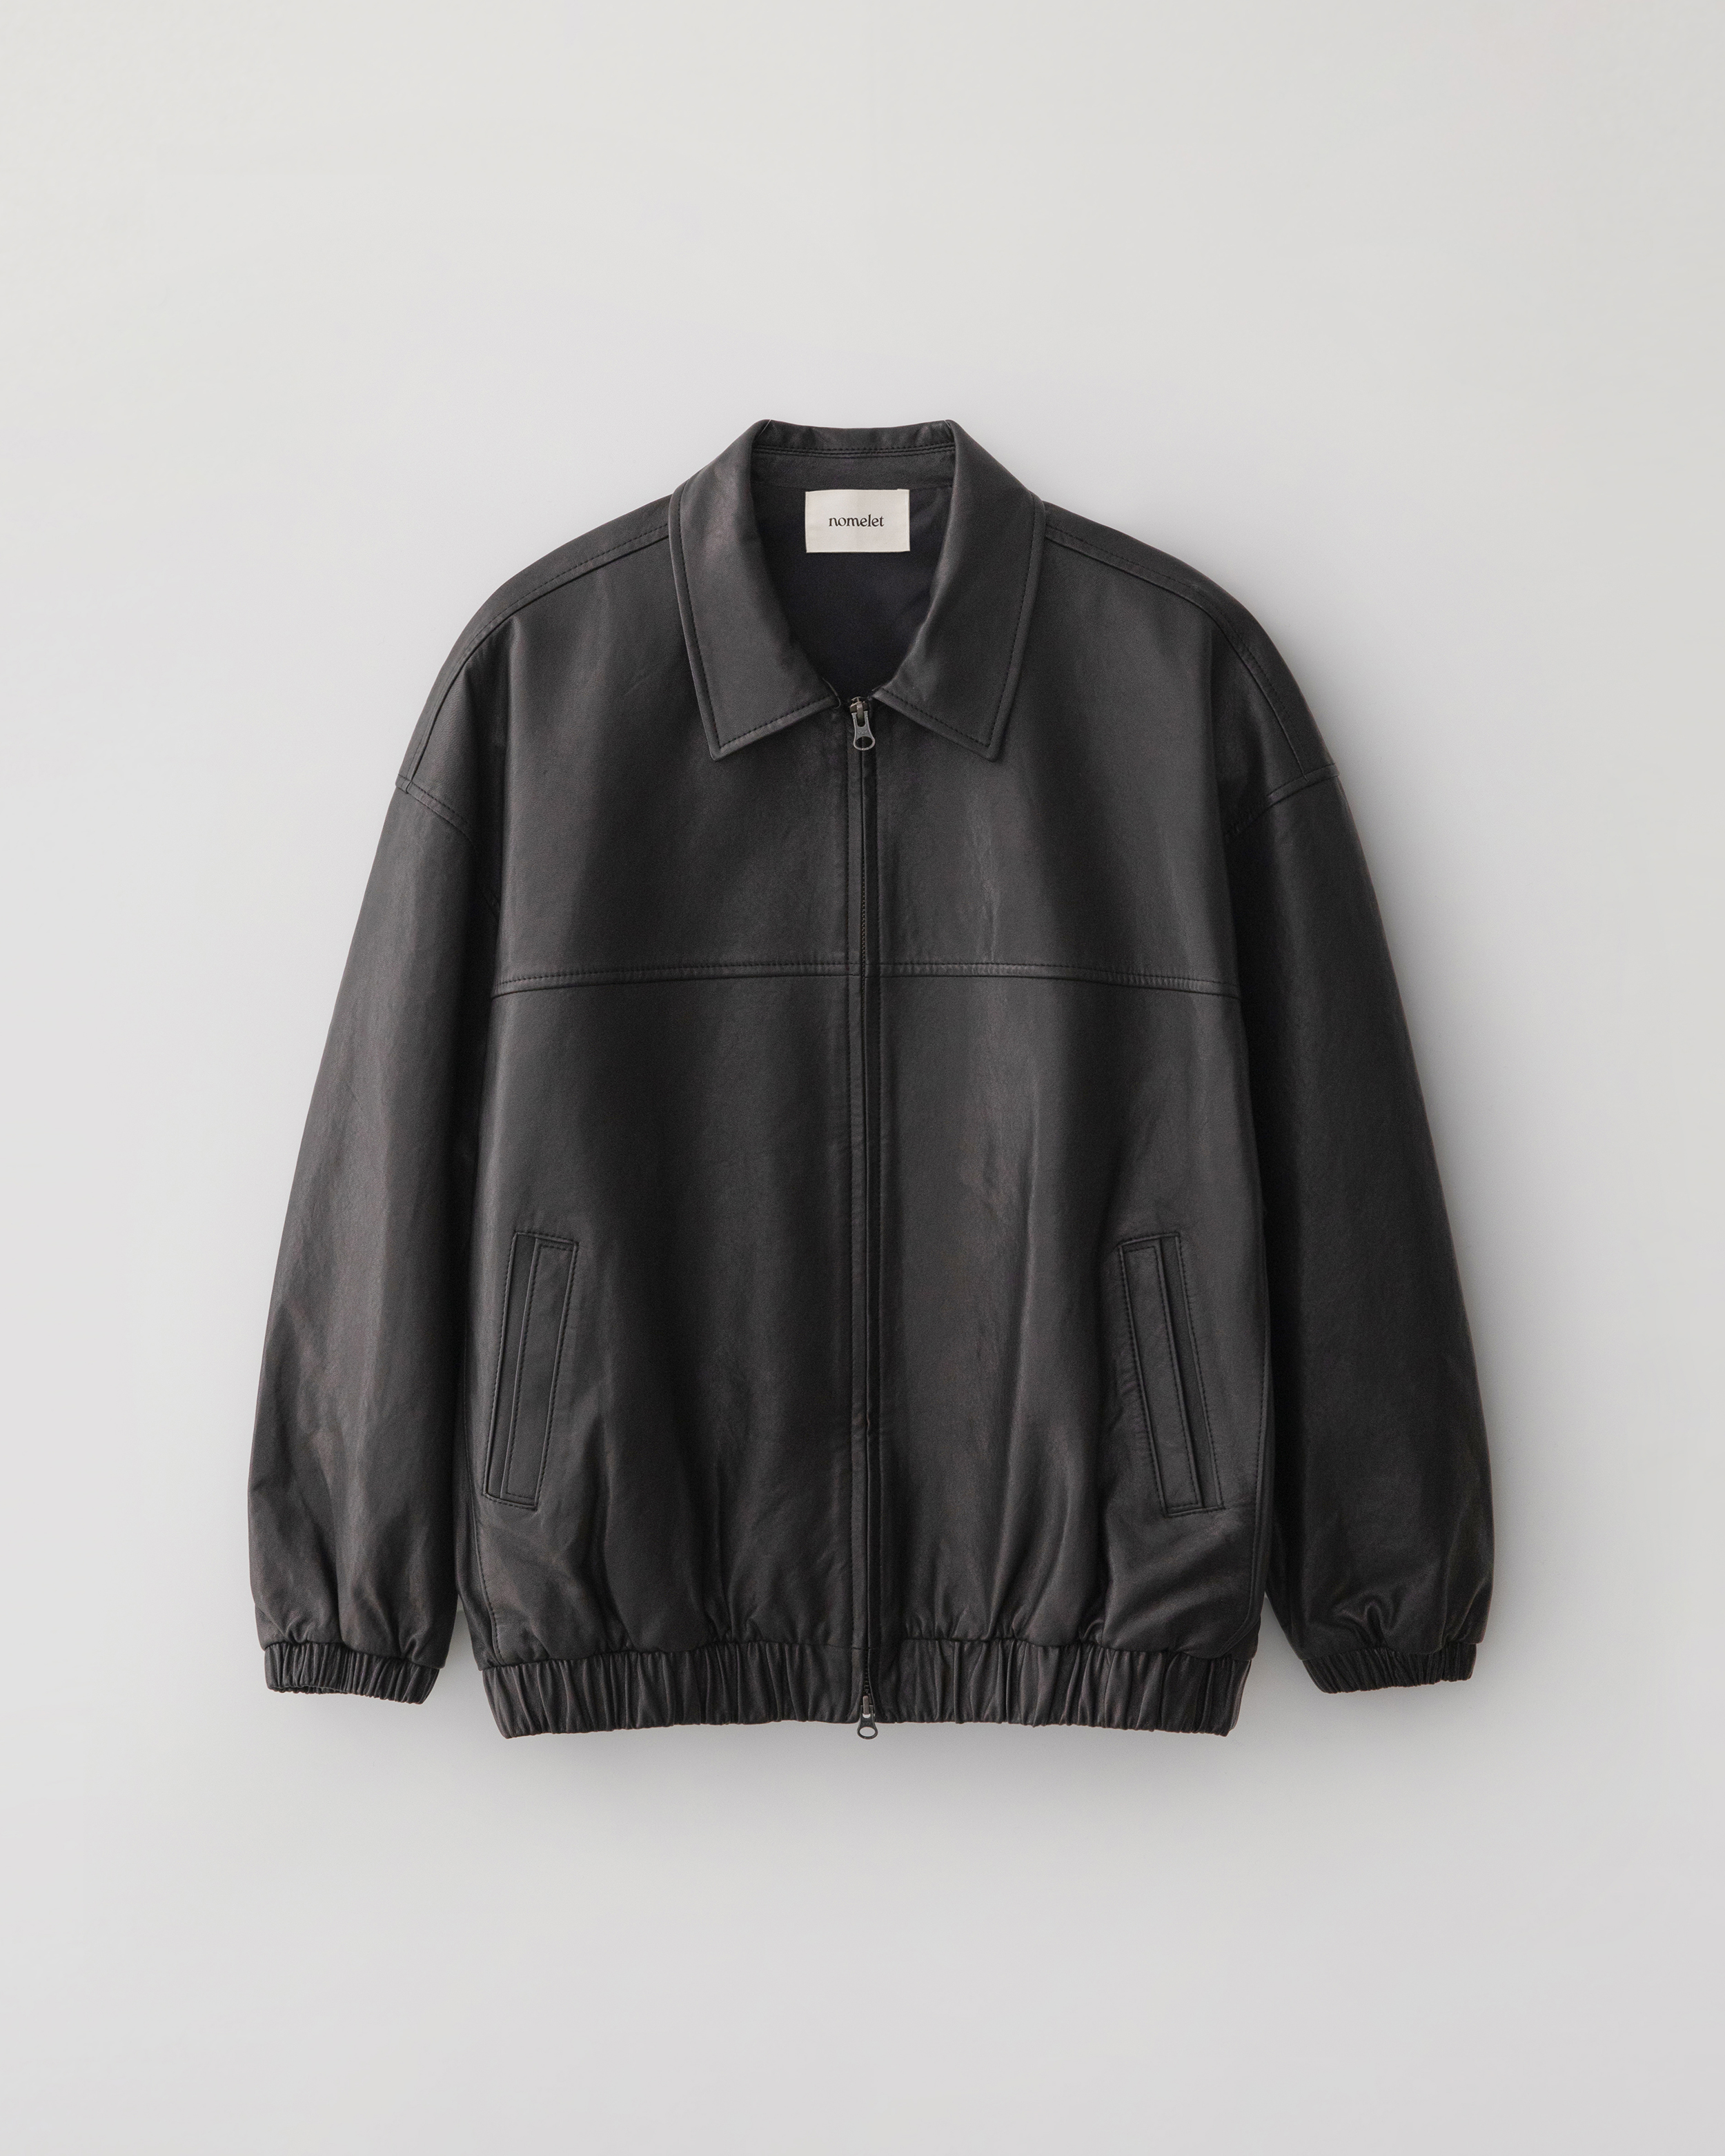 Karen leather jacket (by vegetable lambskin leather)